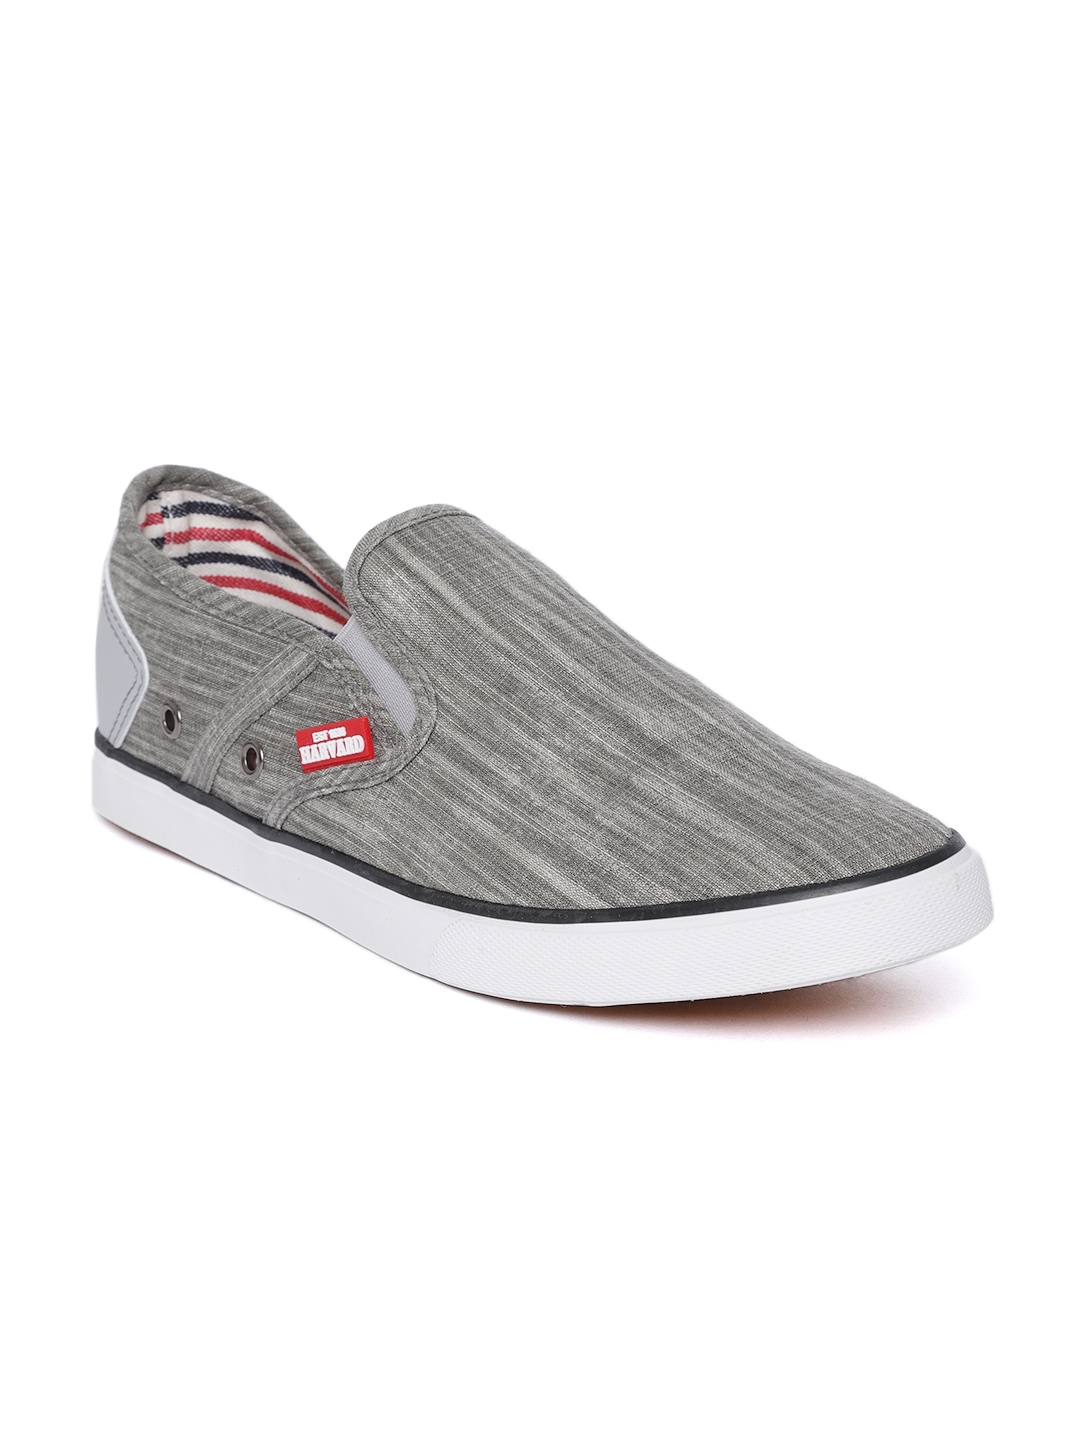 Buy Harvard Men Grey Slip On Sneakers - Casual Shoes for Men 8086807 ...